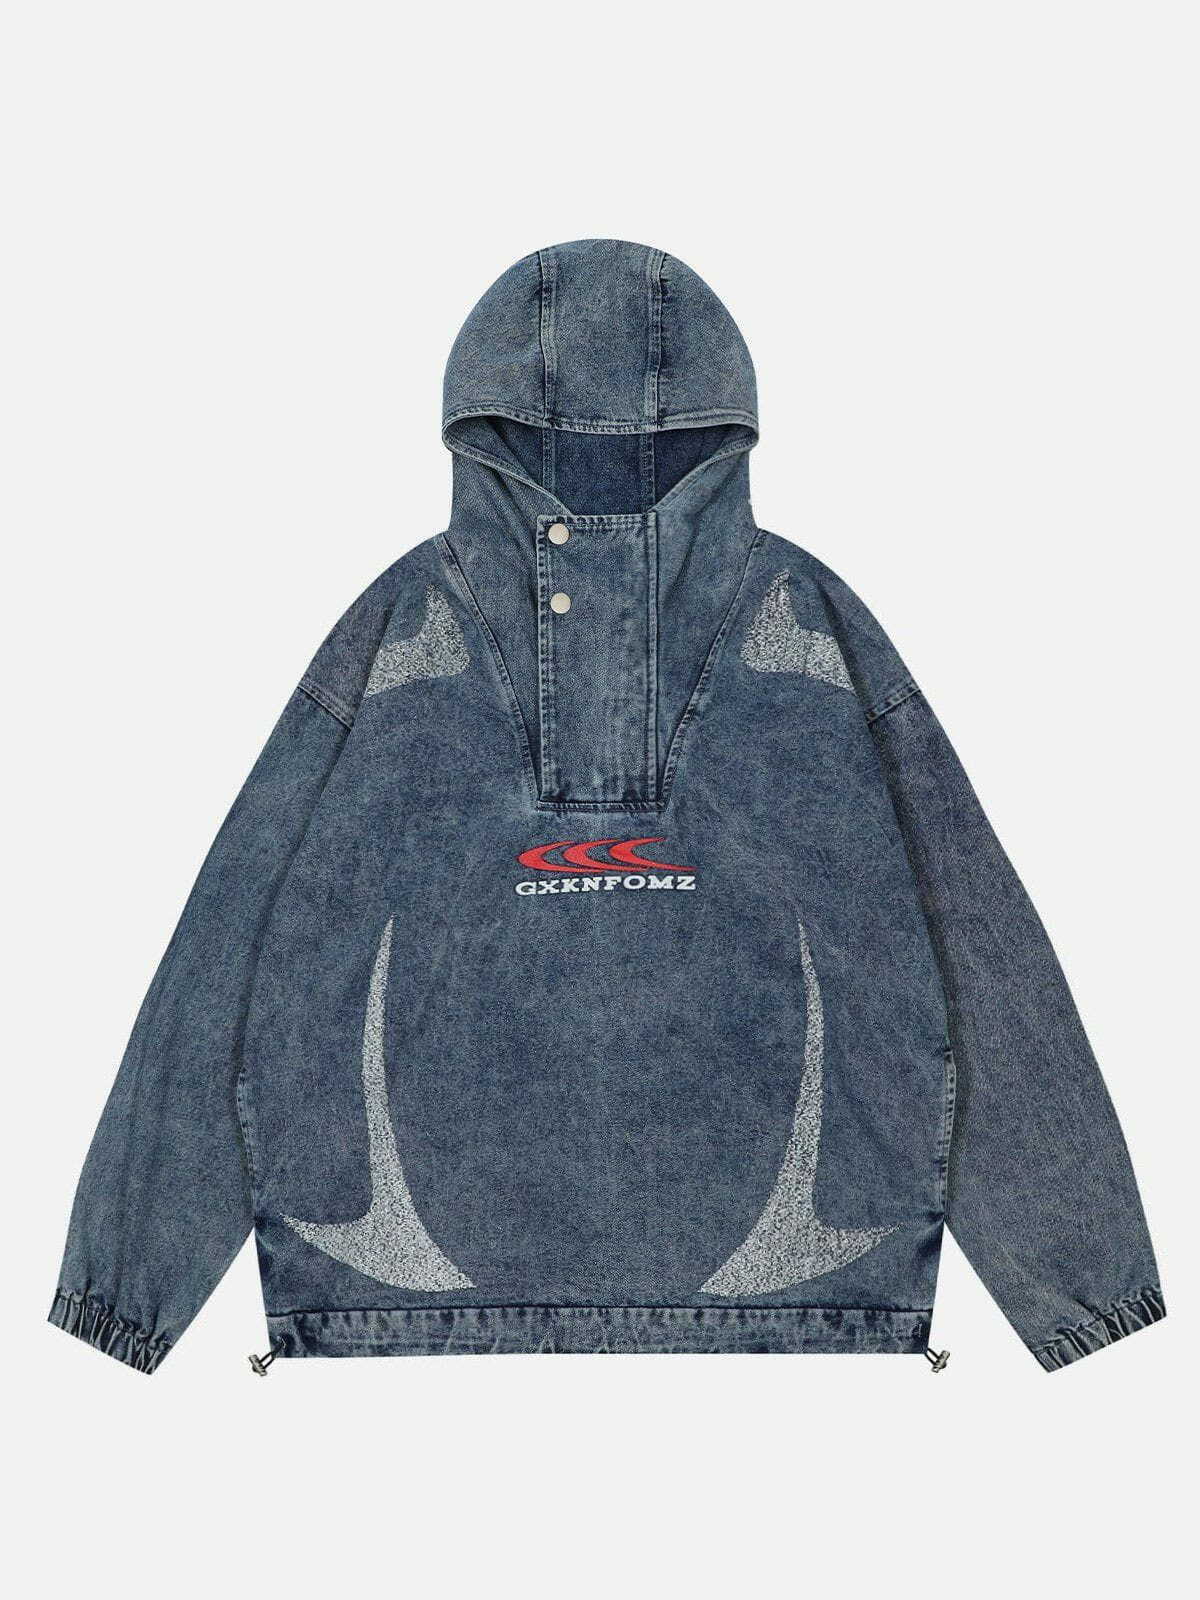 retro washed hoodie racing vibes urban chic 4944